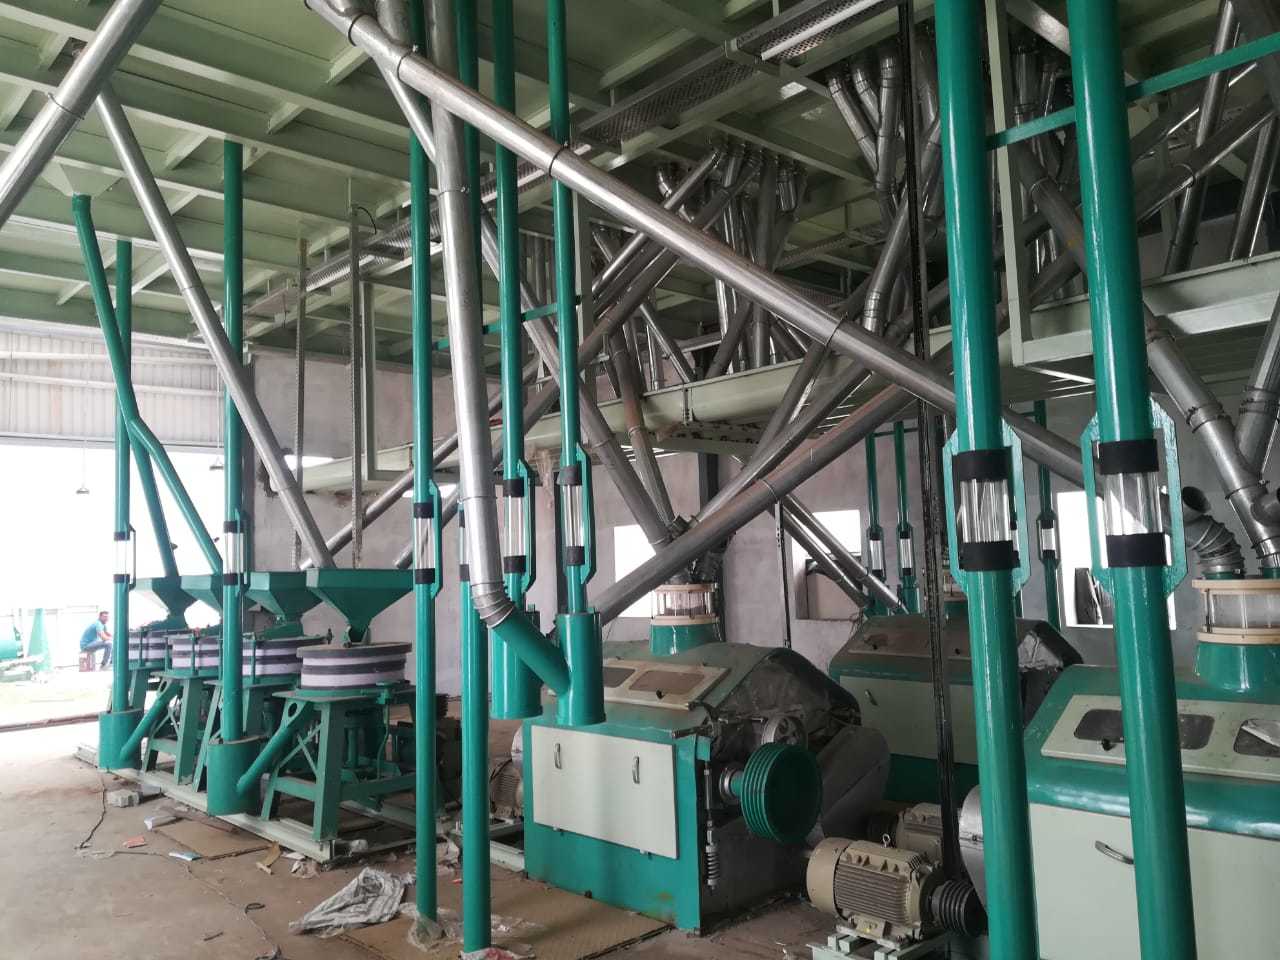 Industrial Maida Flour Mill Plant